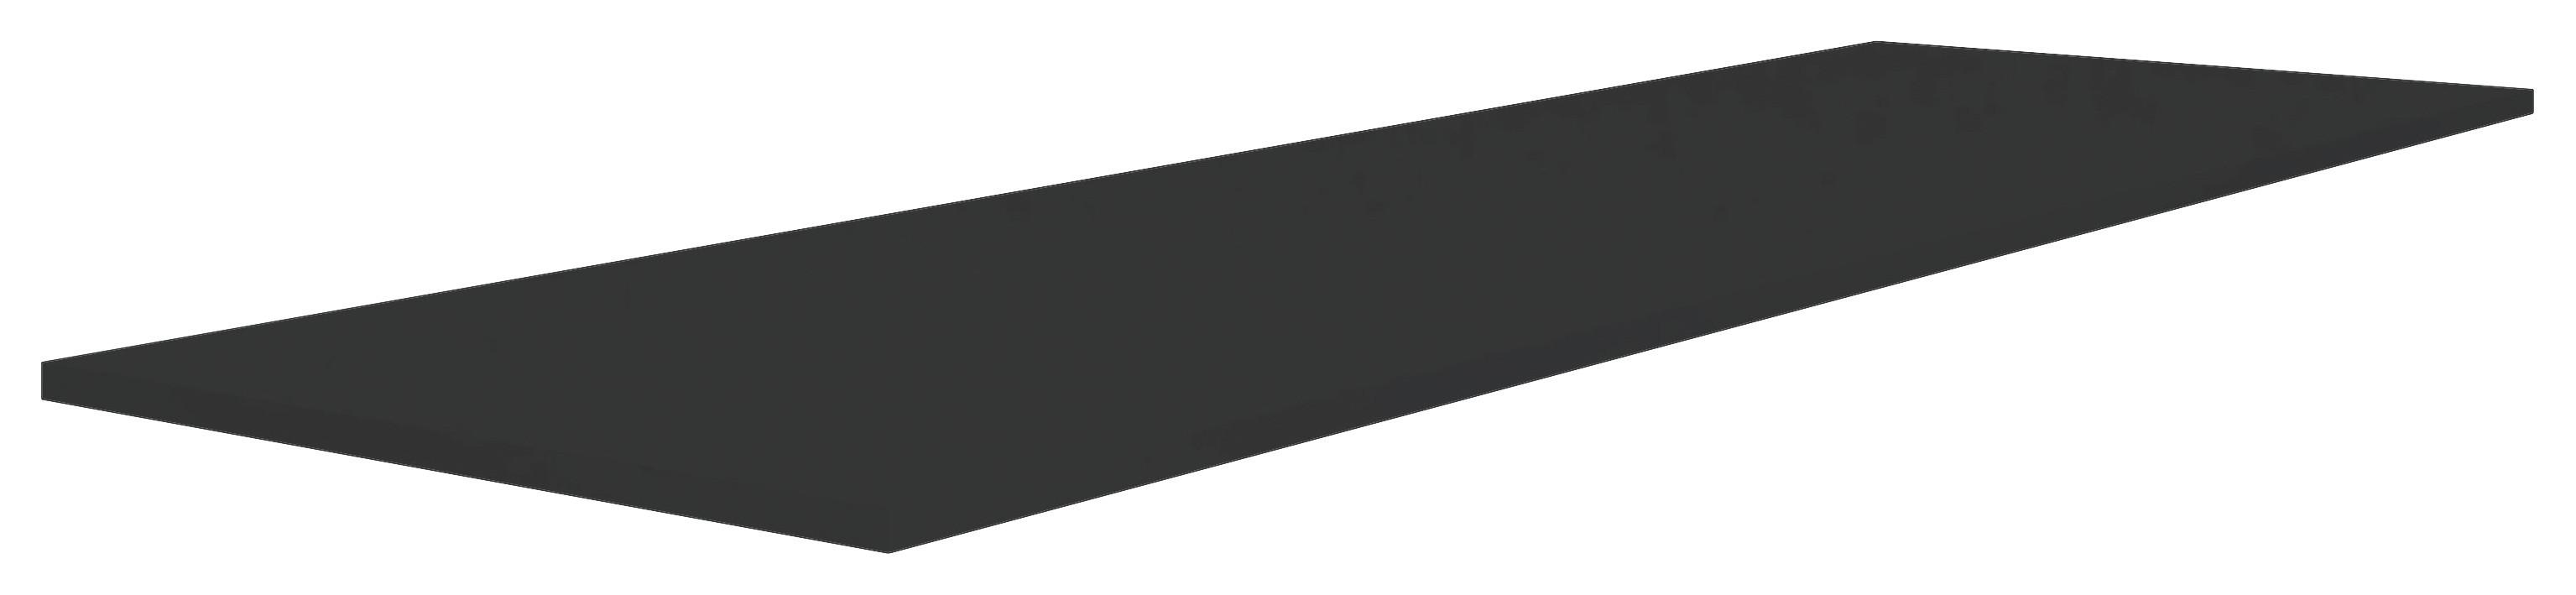 Vrchná Doska Unit-Elements - antracitová, Moderný, kompozitné drevo (182,6/42/1,6cm) - Ondega